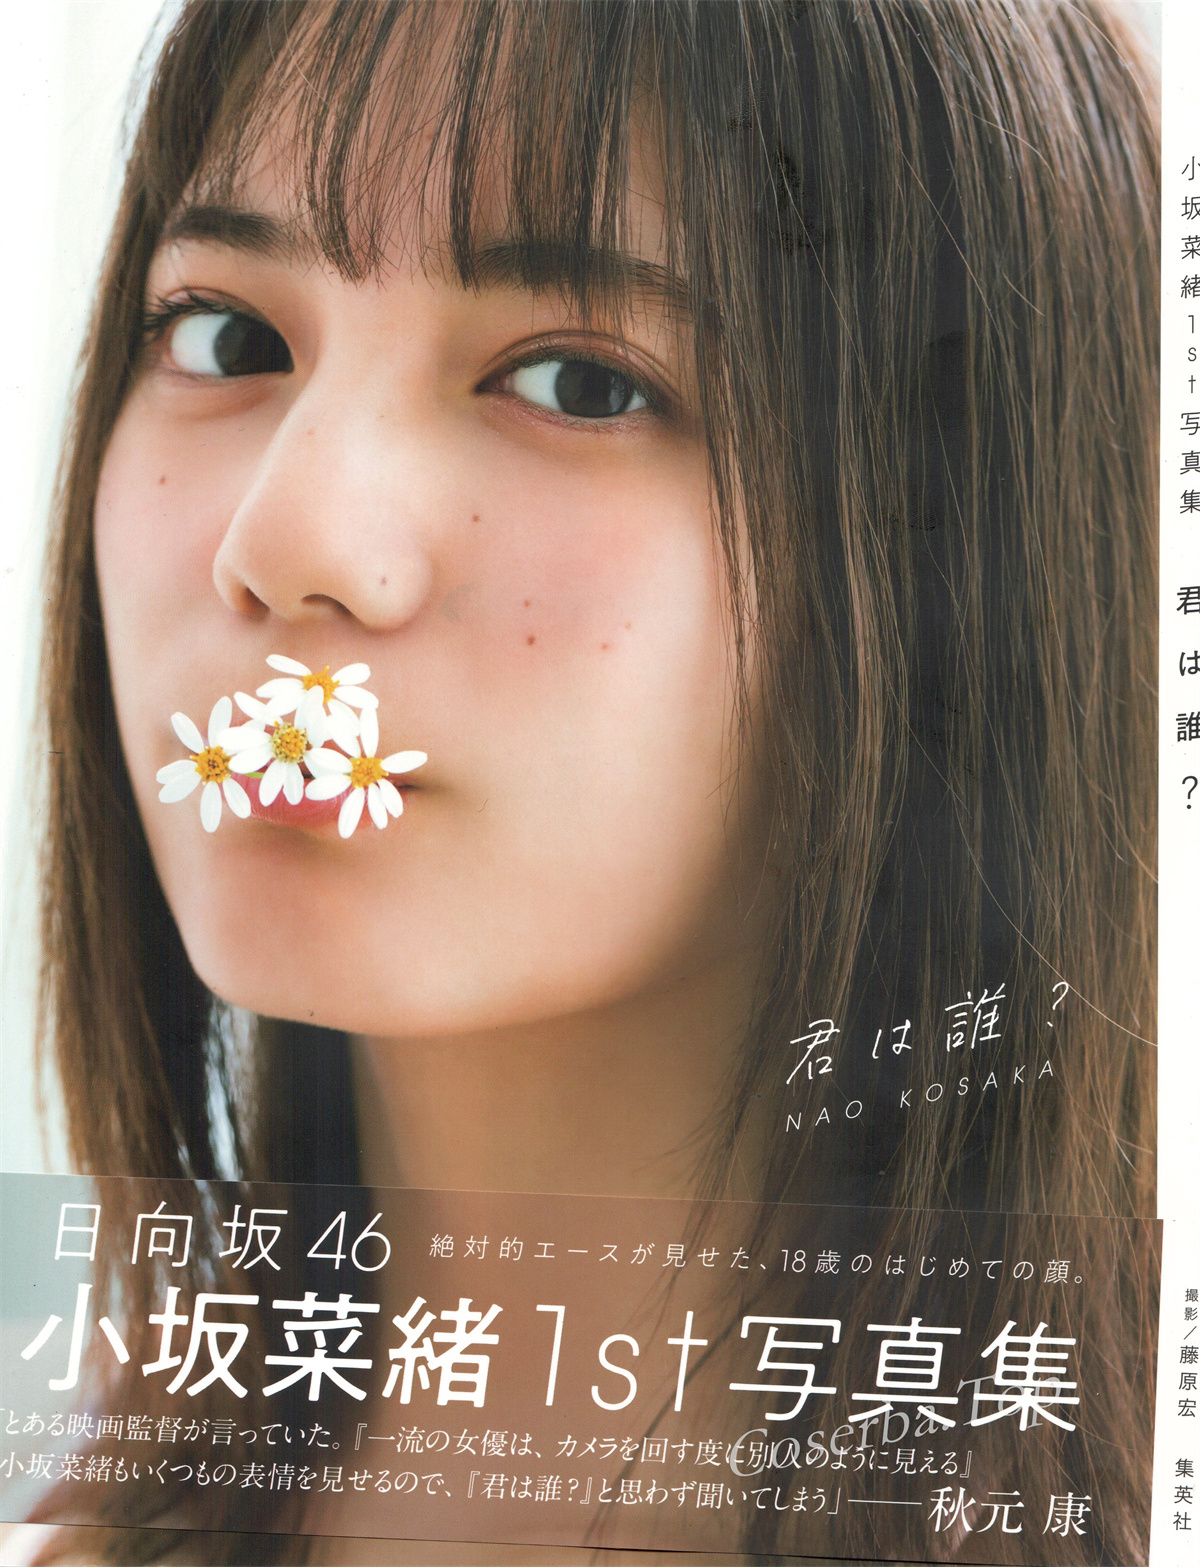 Kosaka Nao 1st Photobook _HP scan_ _1_.jpg